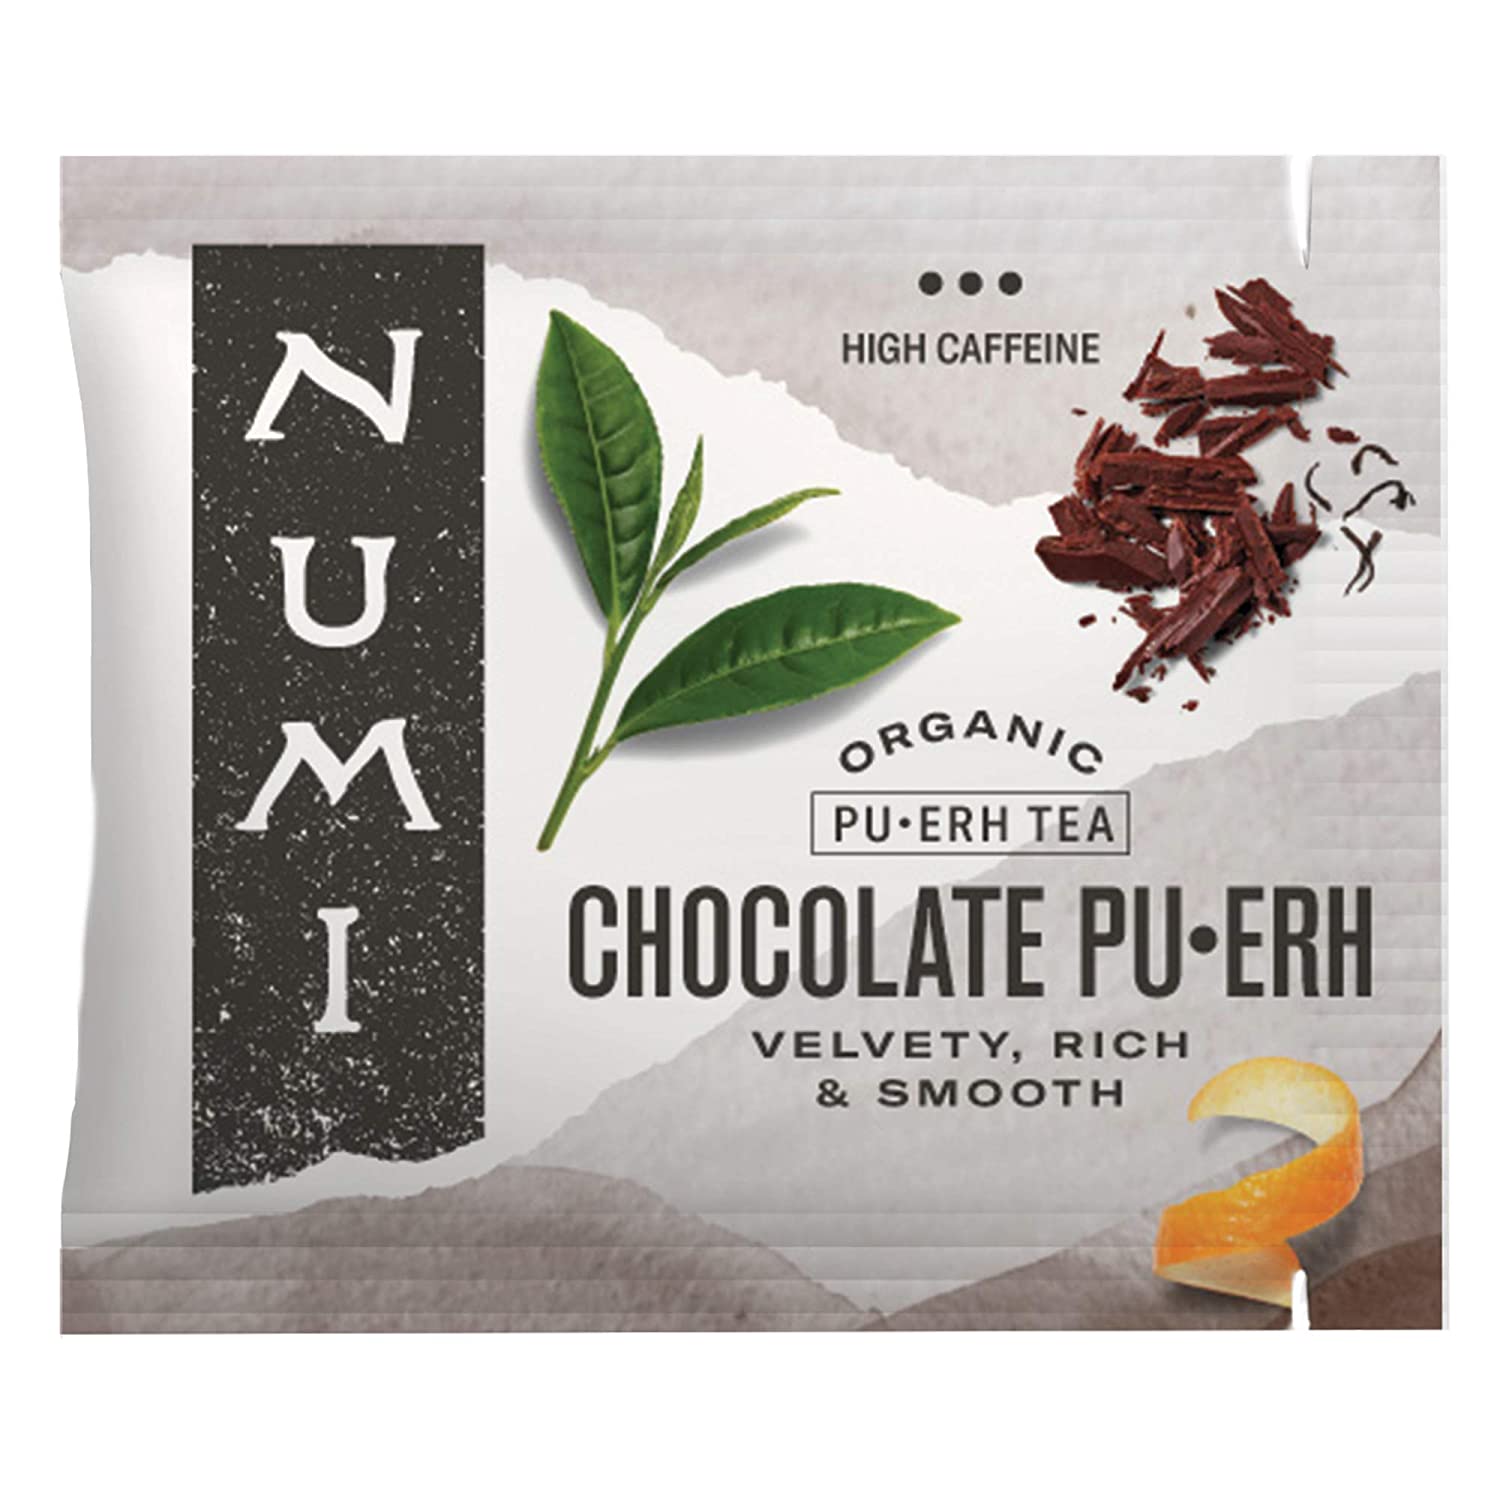 Numi Chocolate Pu-erh Organic Tea - 100 ct bulk box